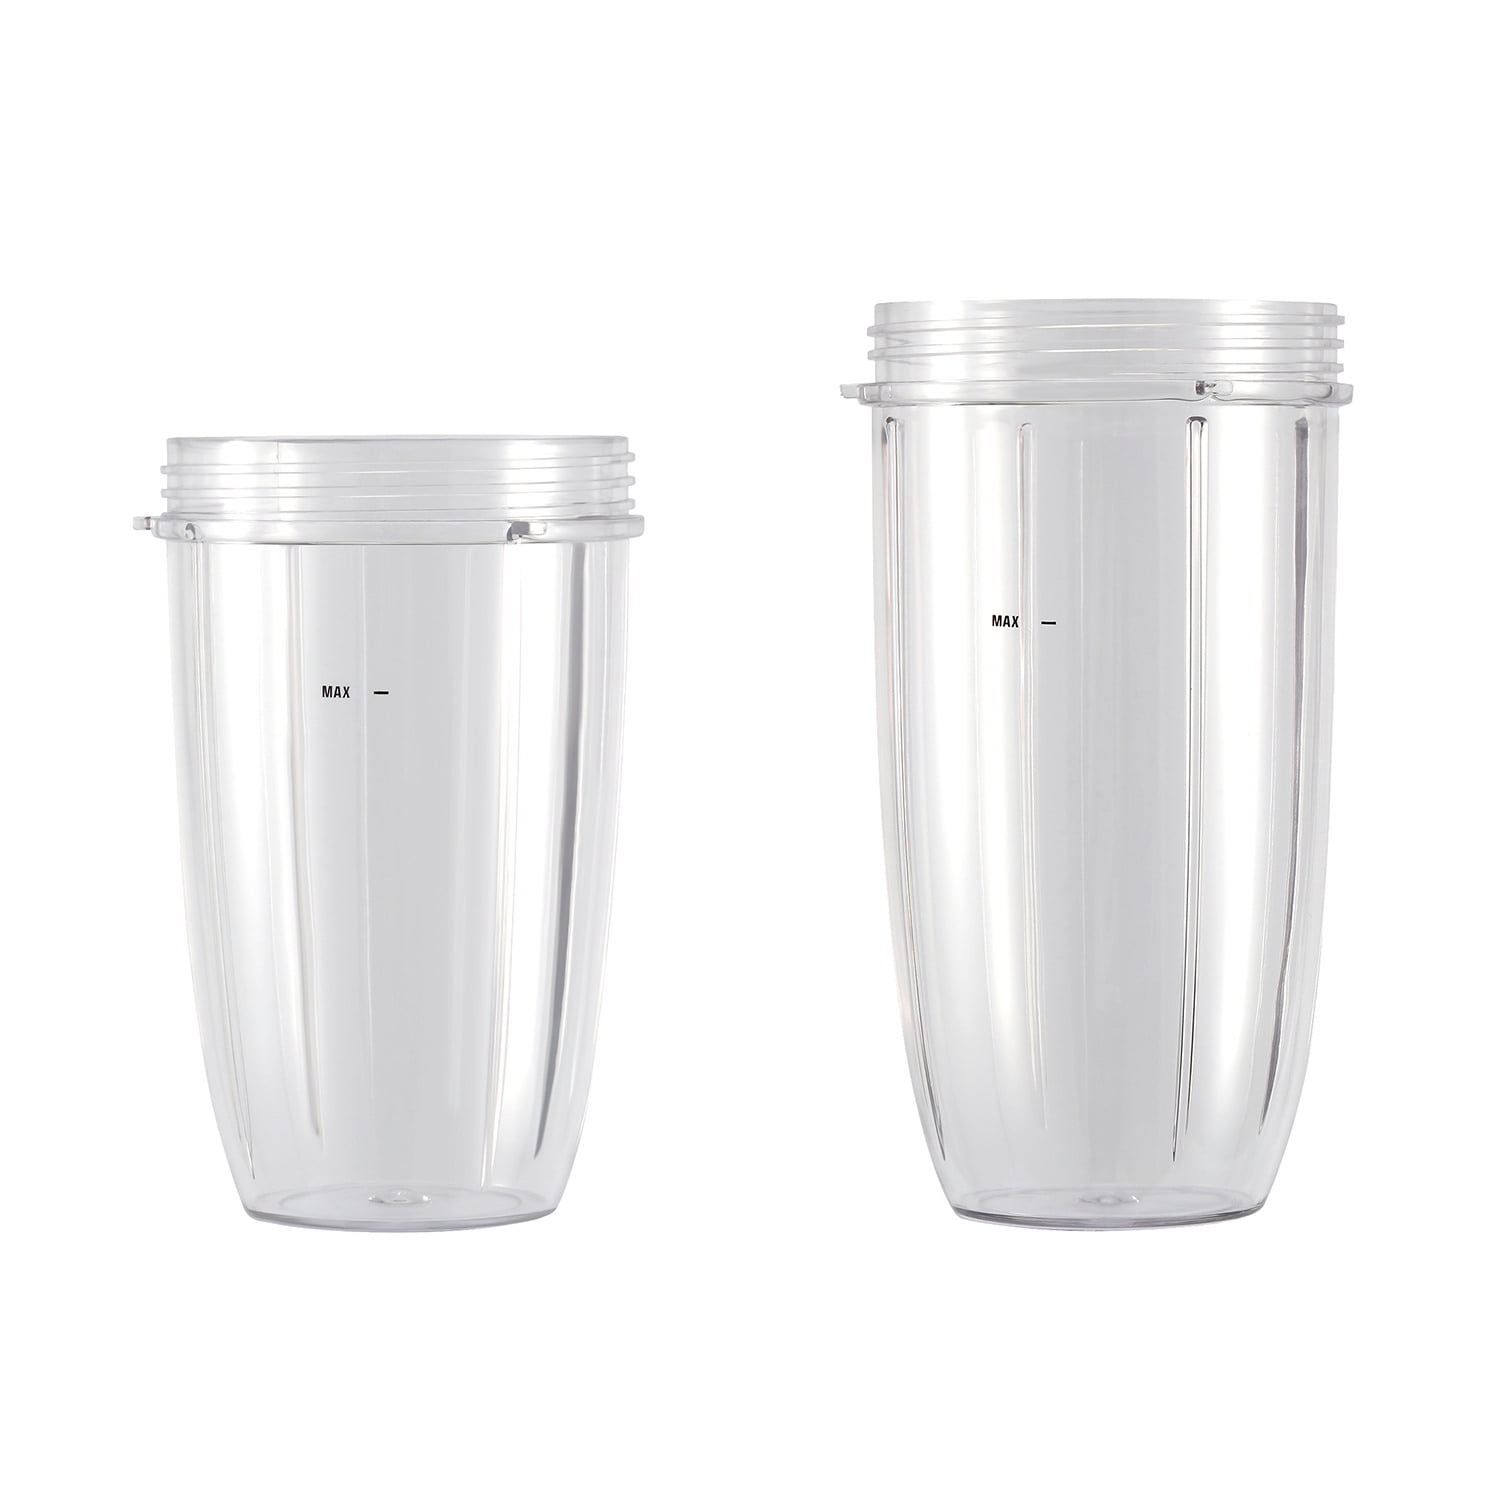 nutribullet replacement cups australia